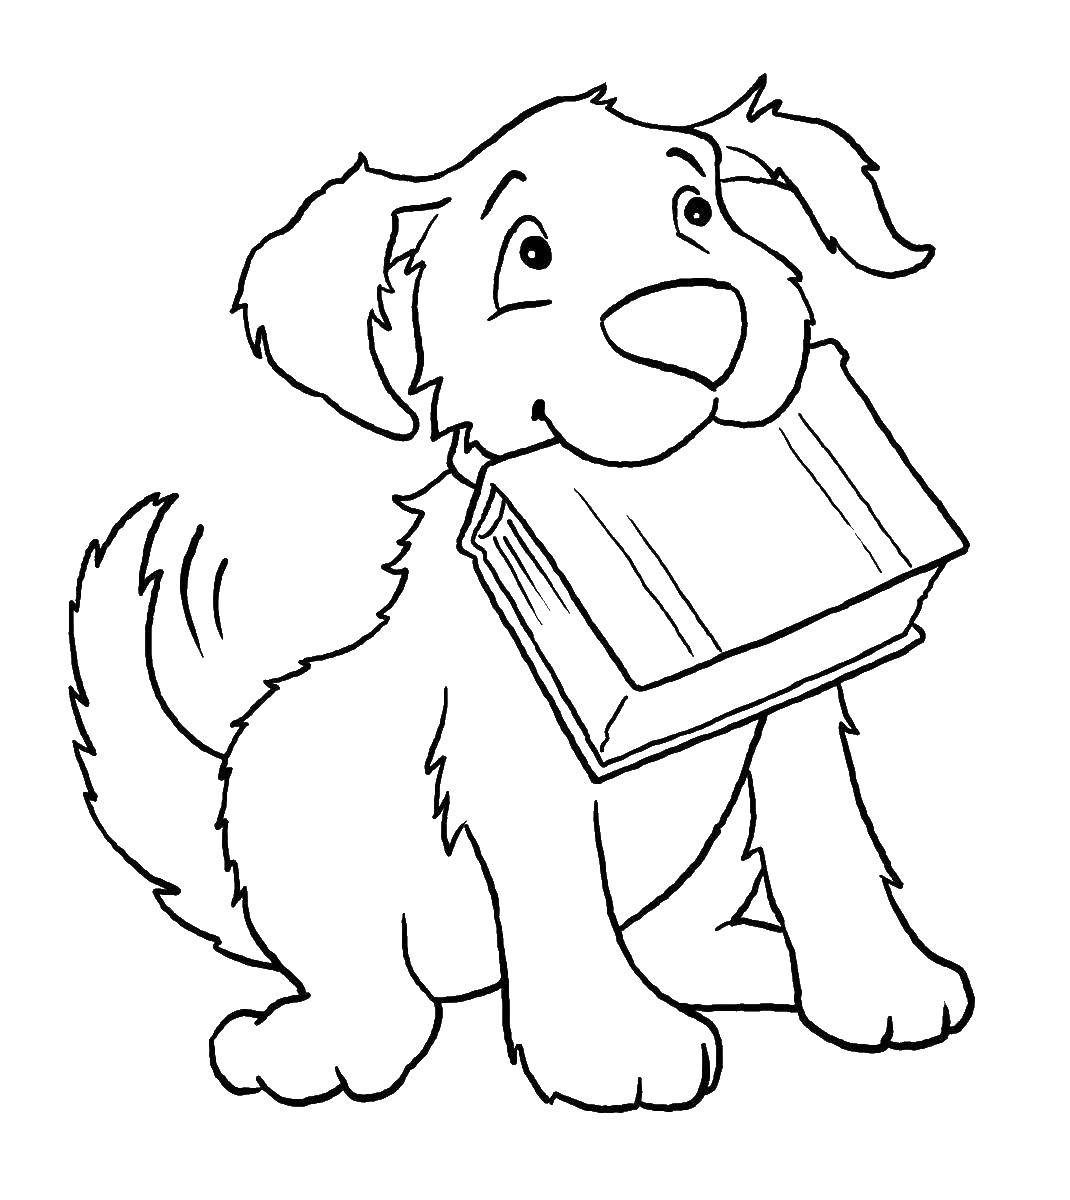 Название: Раскраска Собака с книгой во рту. Категория: собаки. Теги: собака.